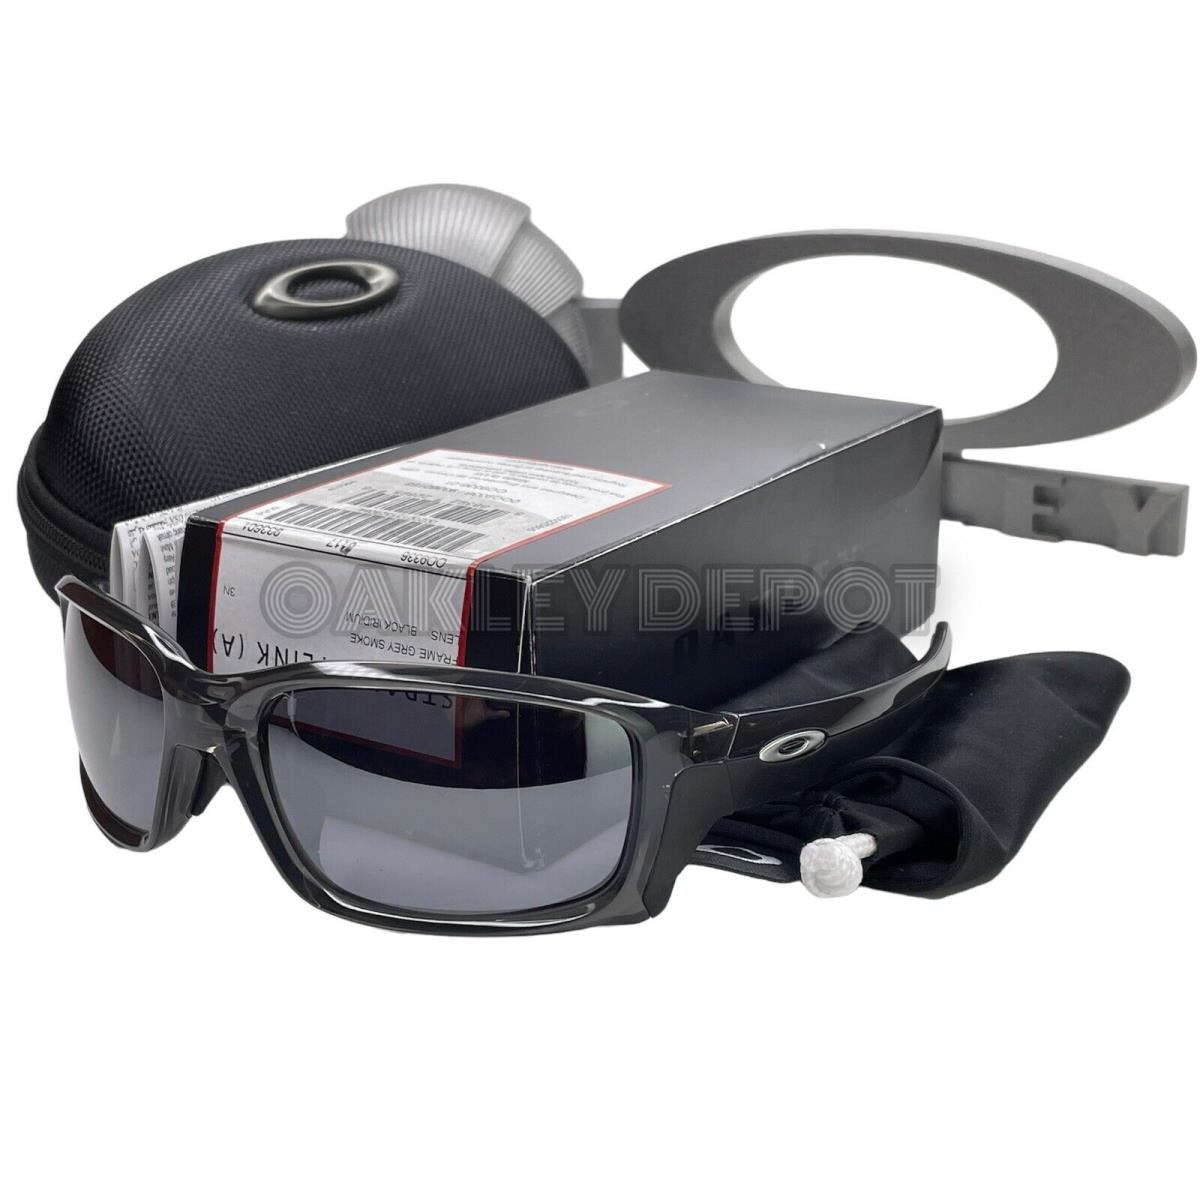 Oakley Straightlink 009336 Grey Smoke/black Iridium Sunglasses A Fit 52 - Frame: GREY SMOKE, Lens: Black